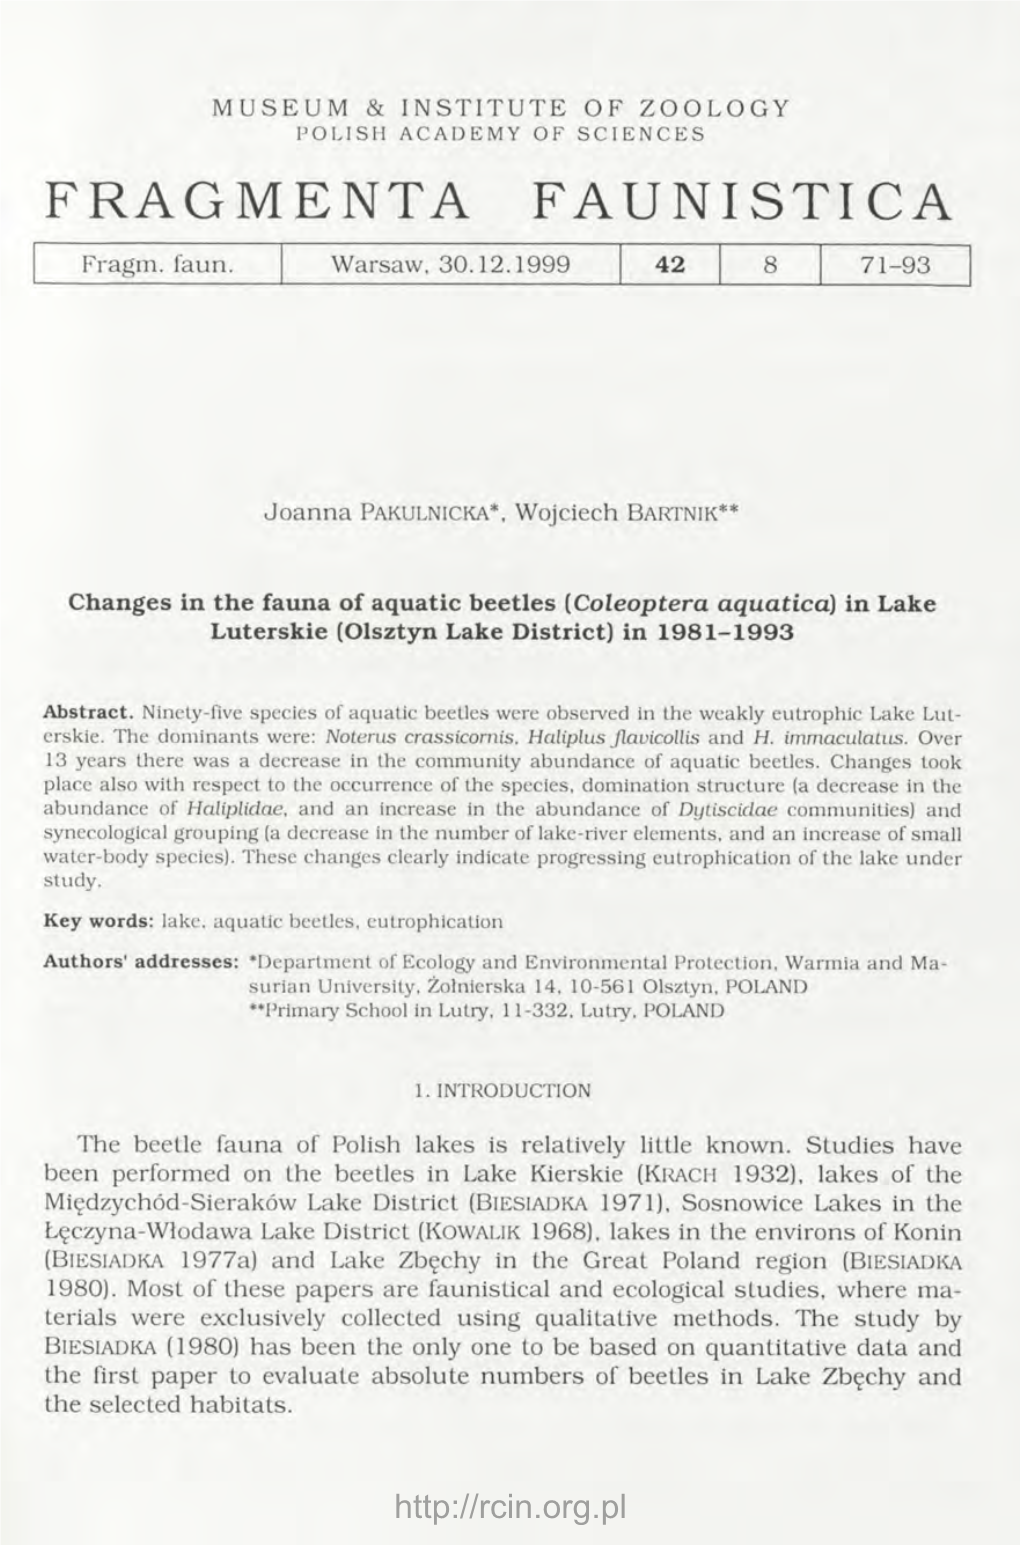 Changes in the Fauna of Aquatic Beetles (Coleoptera Aquatica) in Lake Luterskie (Olsztyn Lake District) in 1981-1993